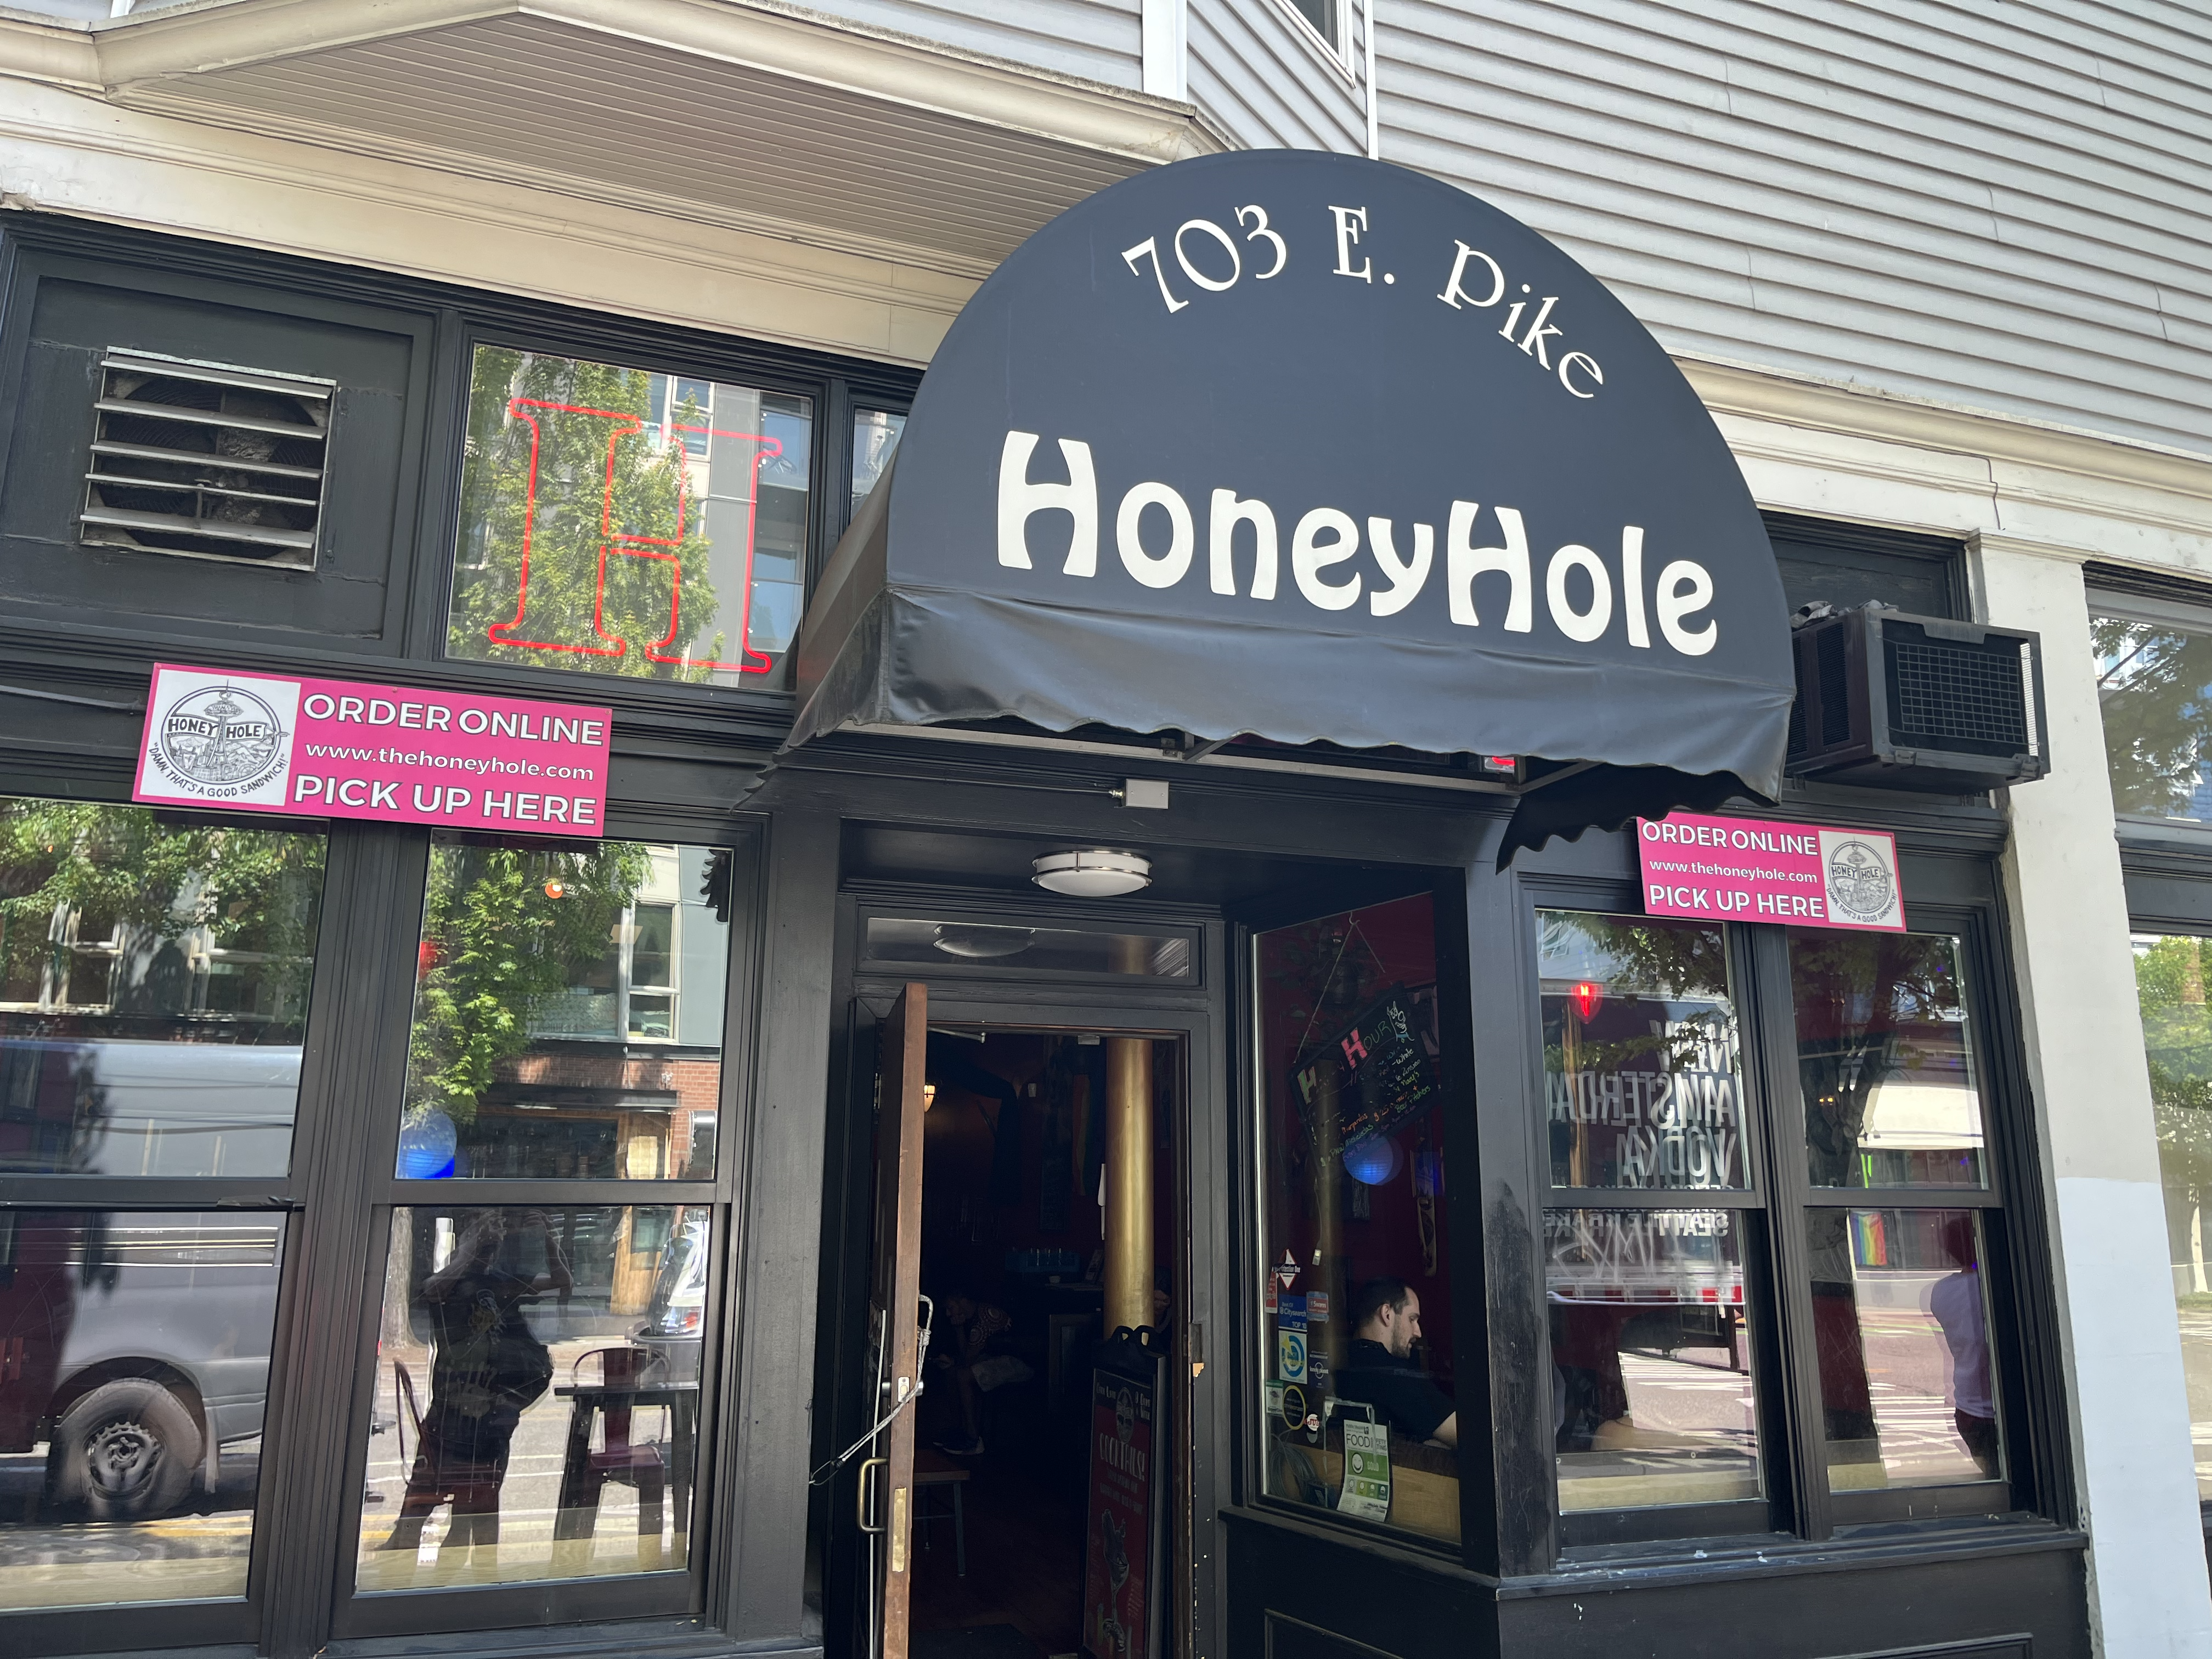 The HoneyHole storefront